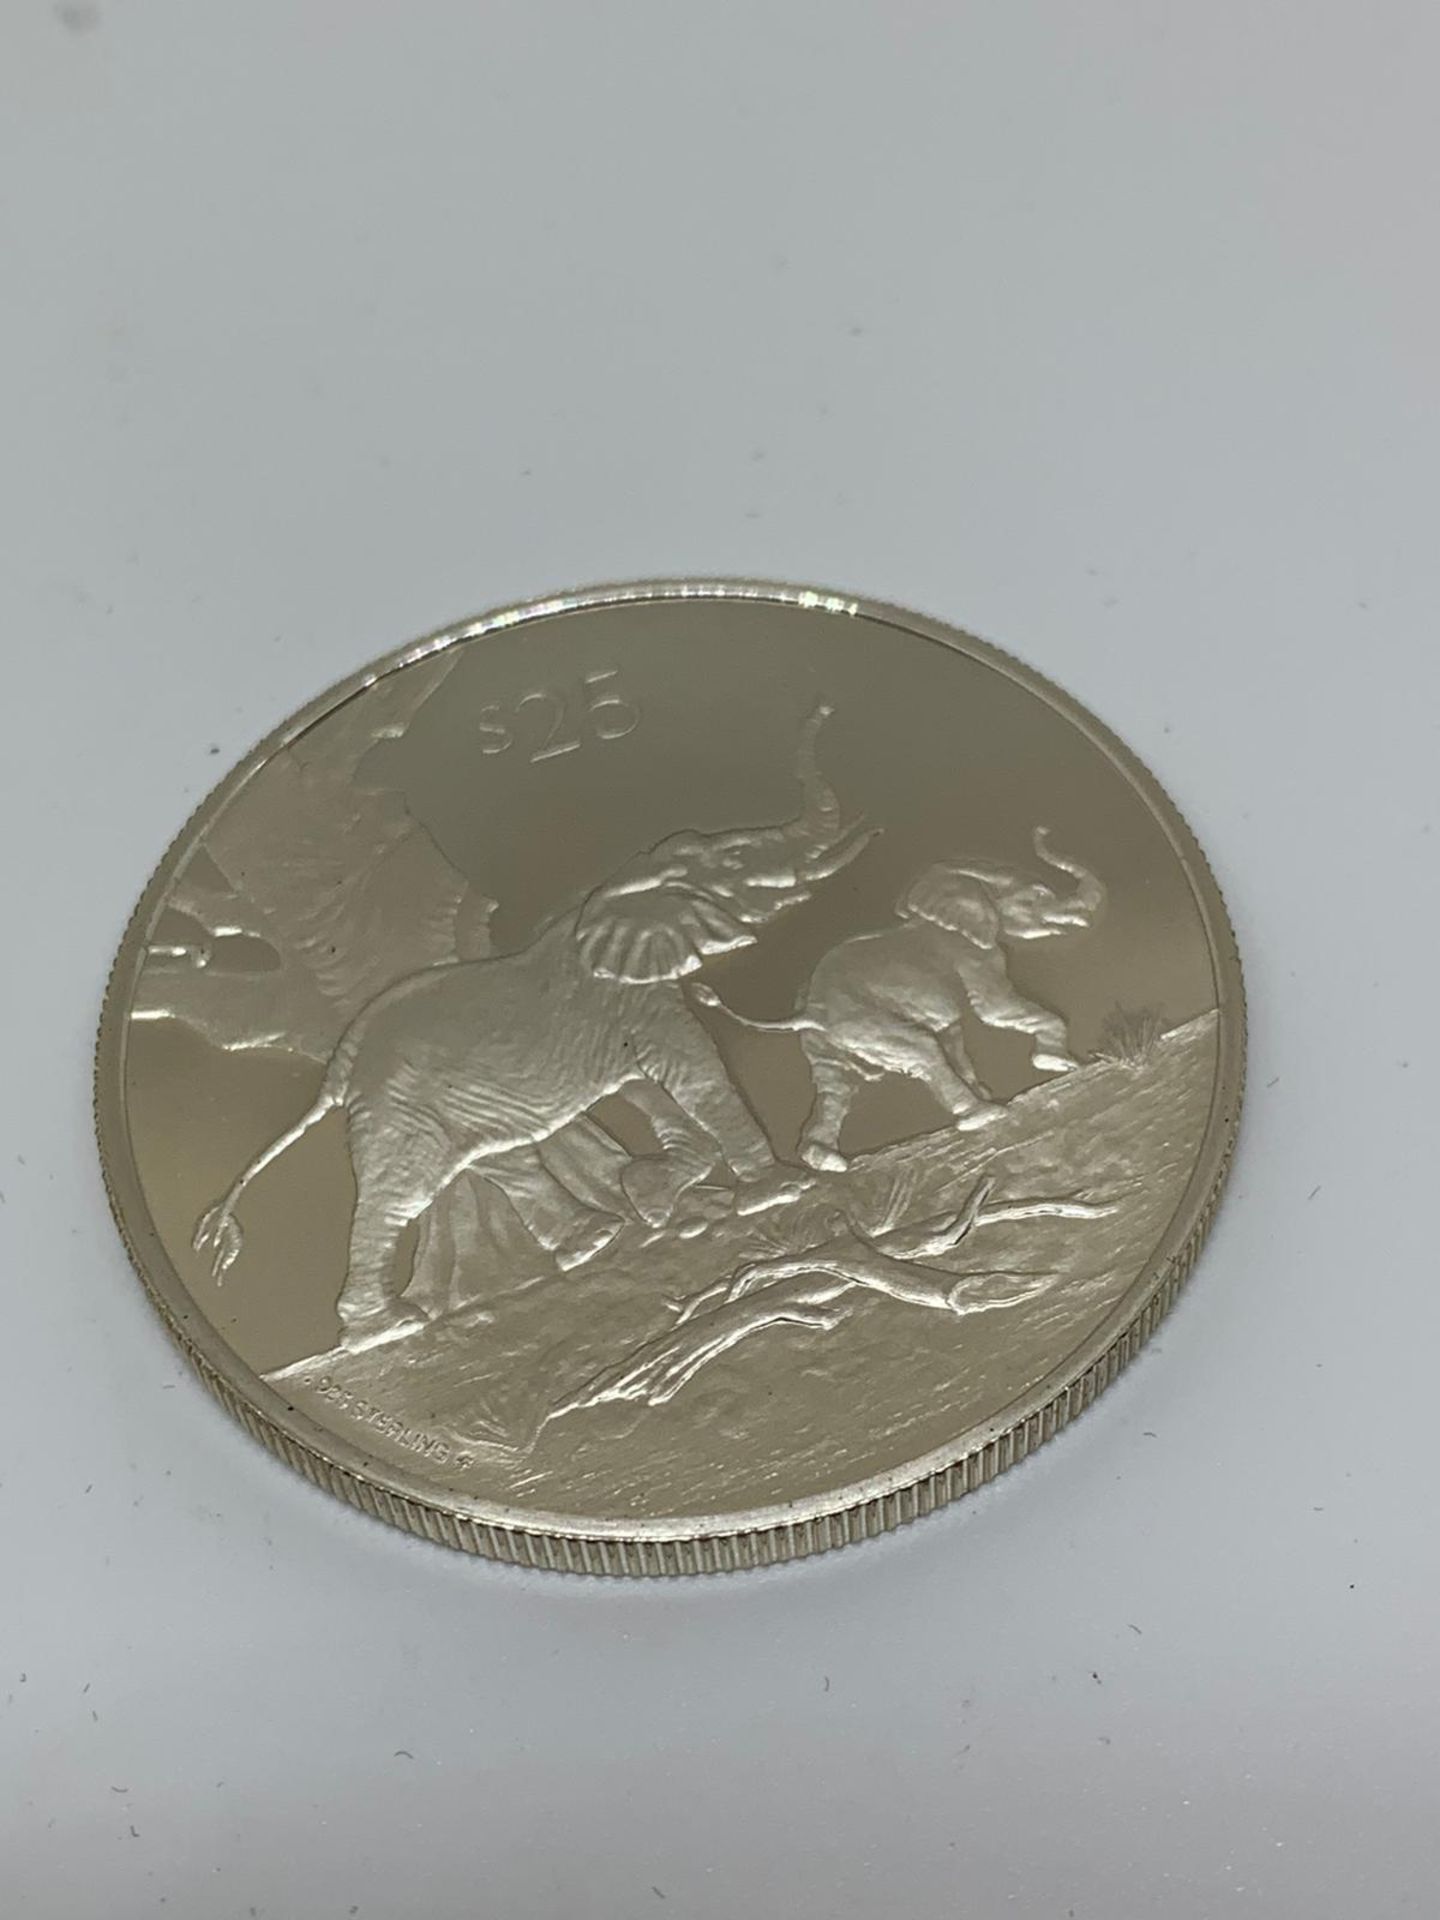 Silver Virgin Islands Coin - Image 2 of 2